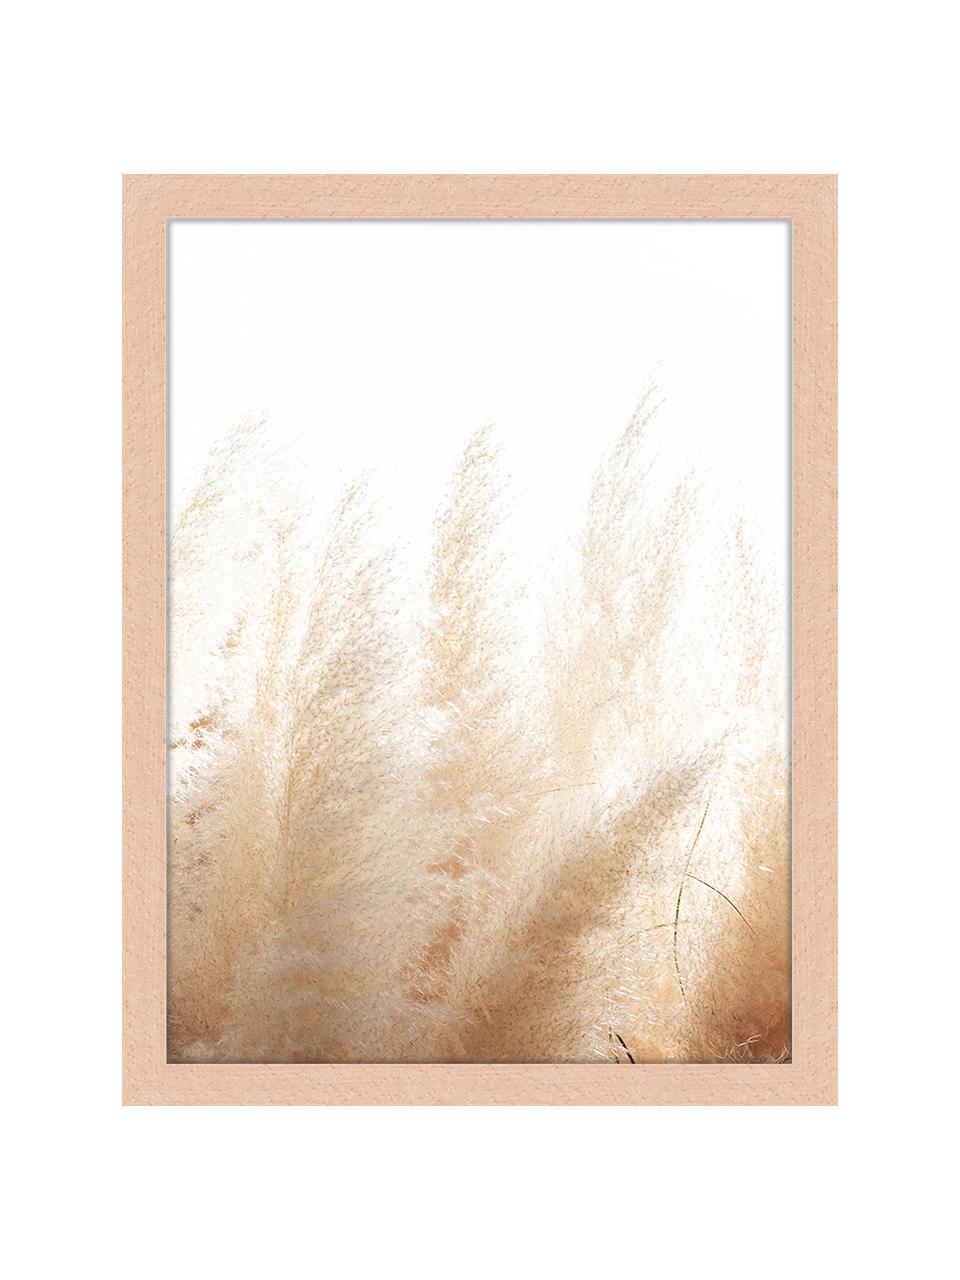 Gerahmter Digitaldruck Pampa Grass, Bild: Digitaldruck auf Papier, , Rahmen: Holz, lackiert, Front: Plexiglas, Pampa Grass, B 33 x H 43 cm